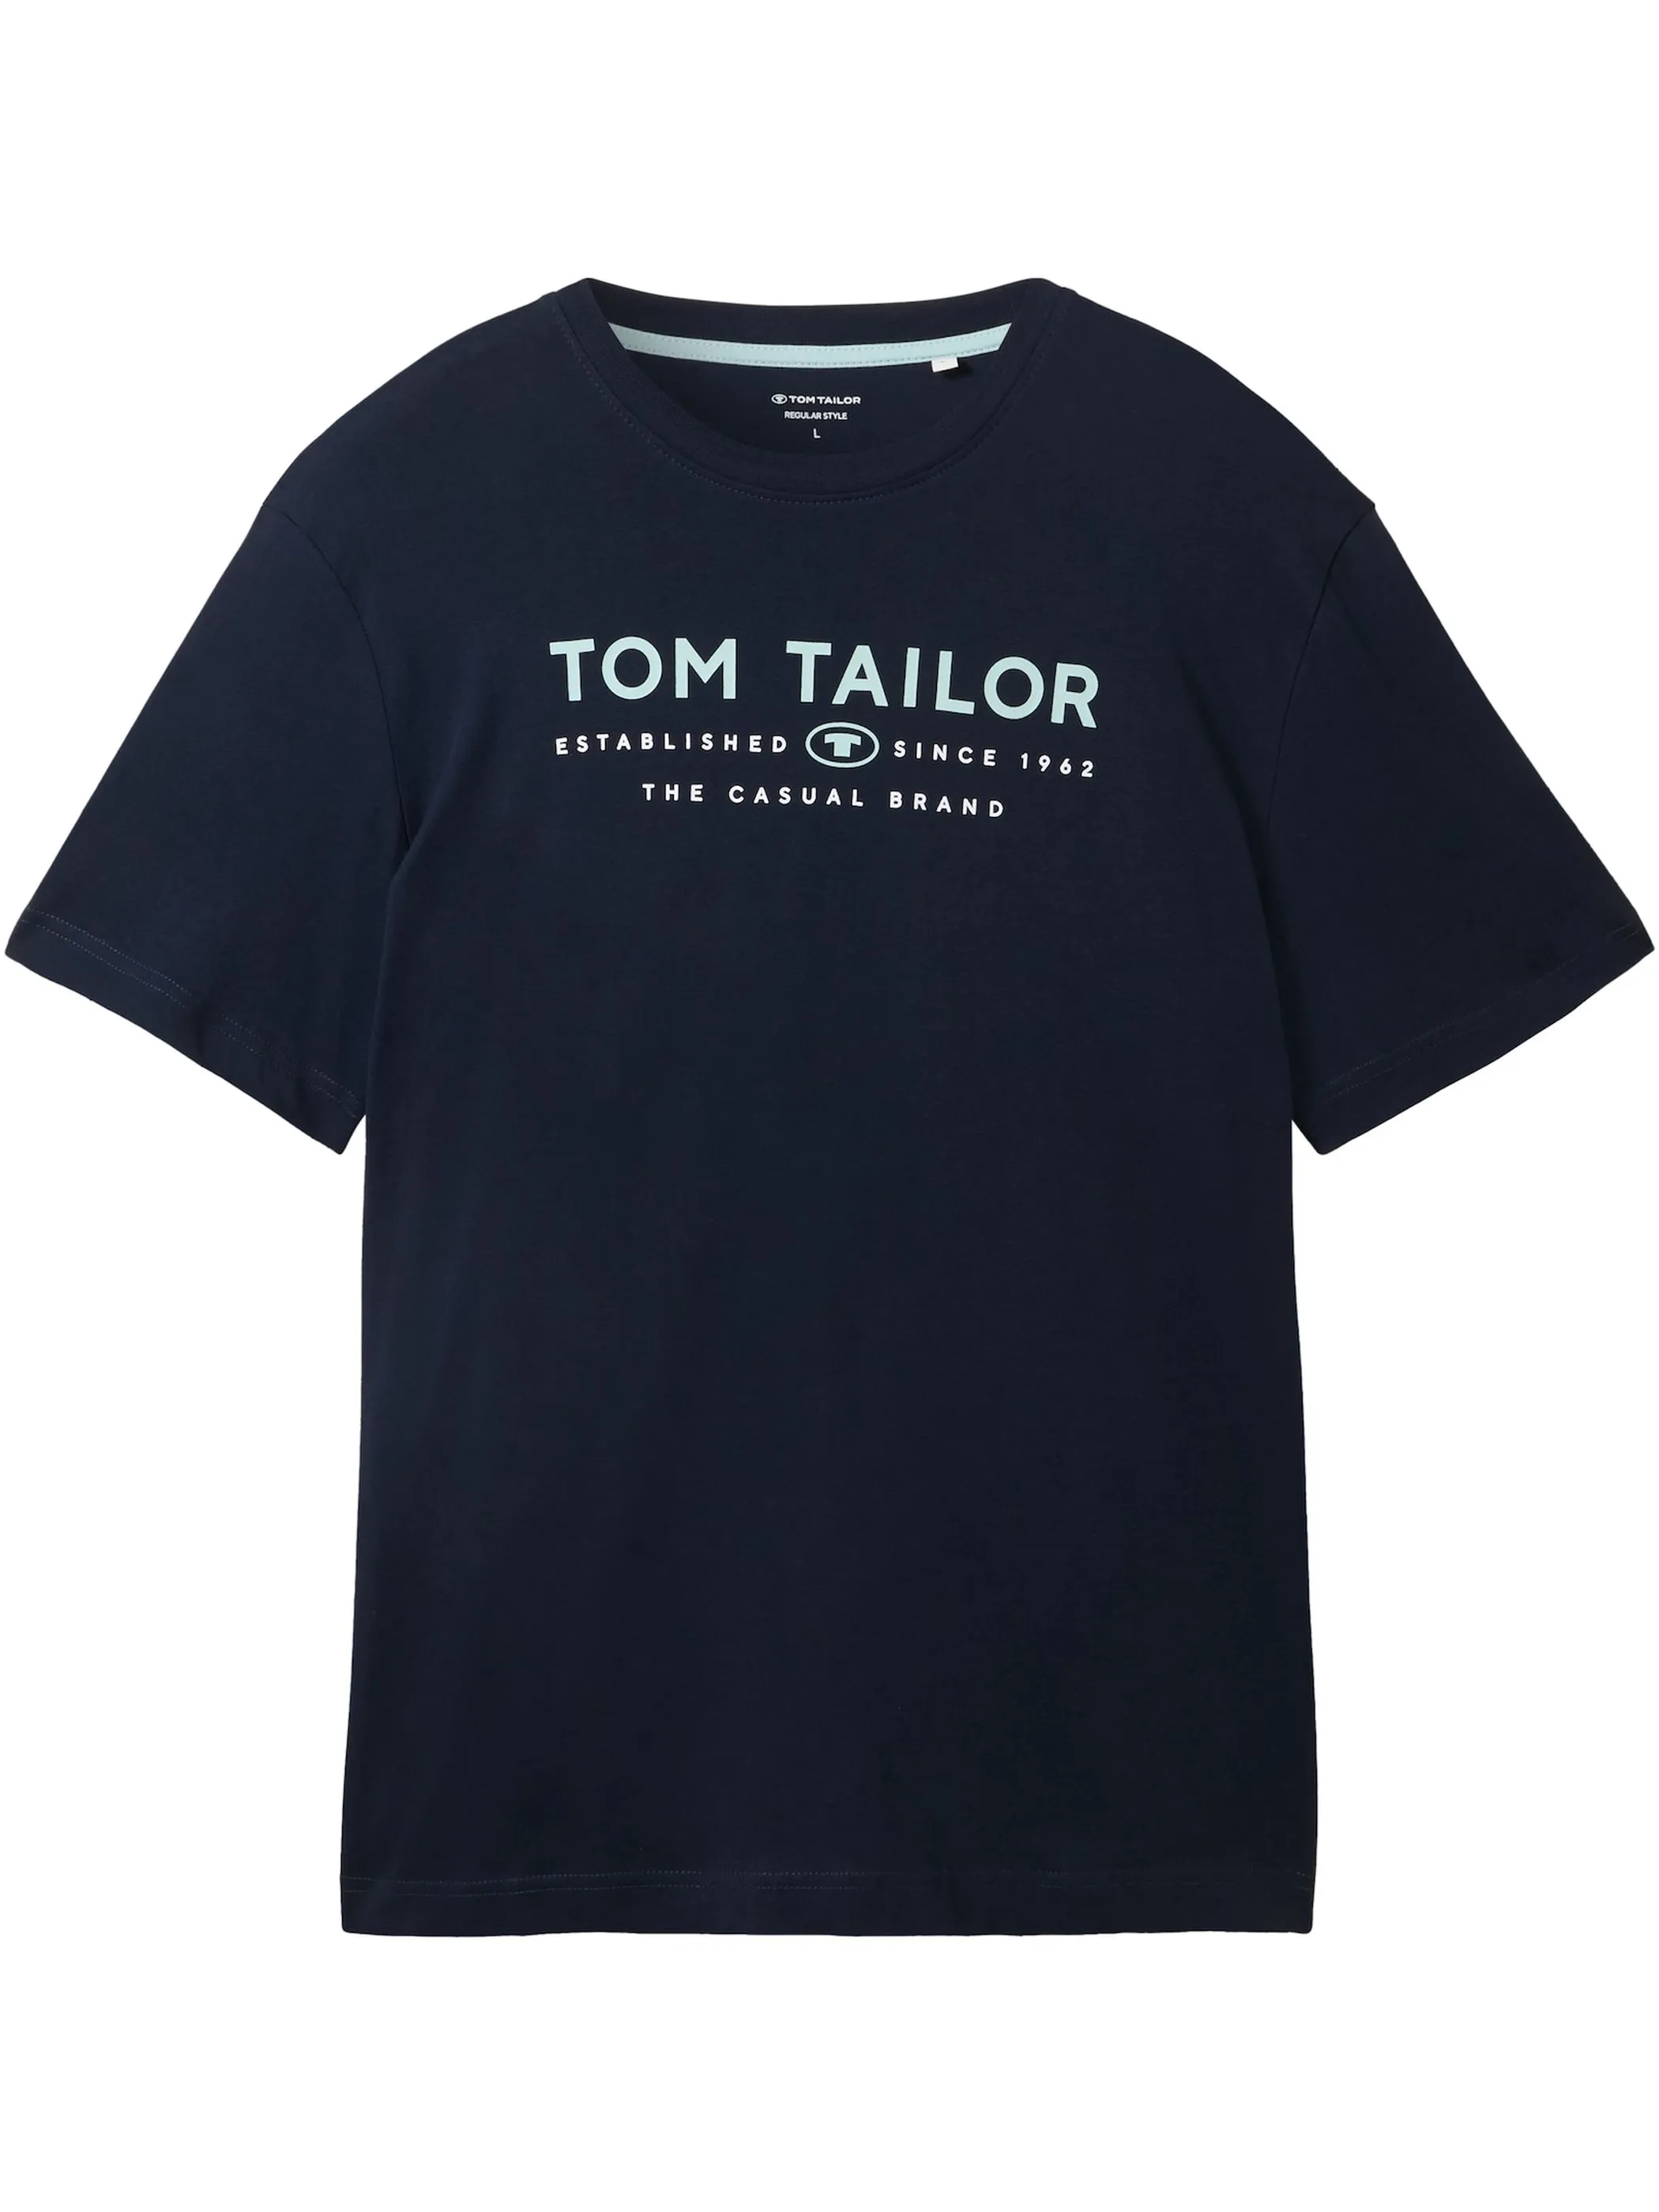 Tom Tailor 1043276 t-shirt with print Blau 898849 10668 1